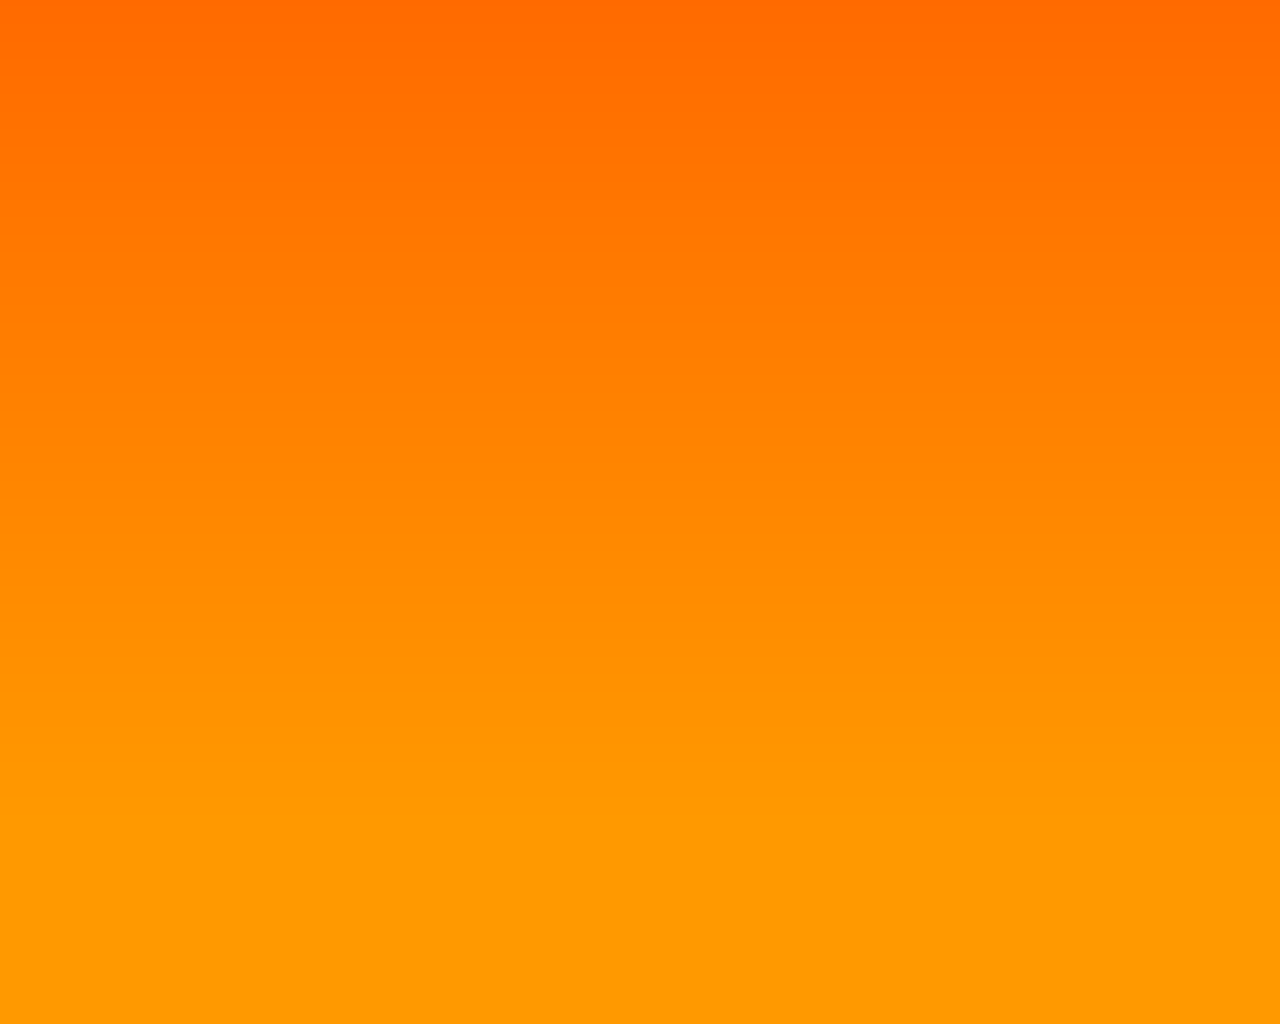 Orange Wallpaper by soxrox22 on